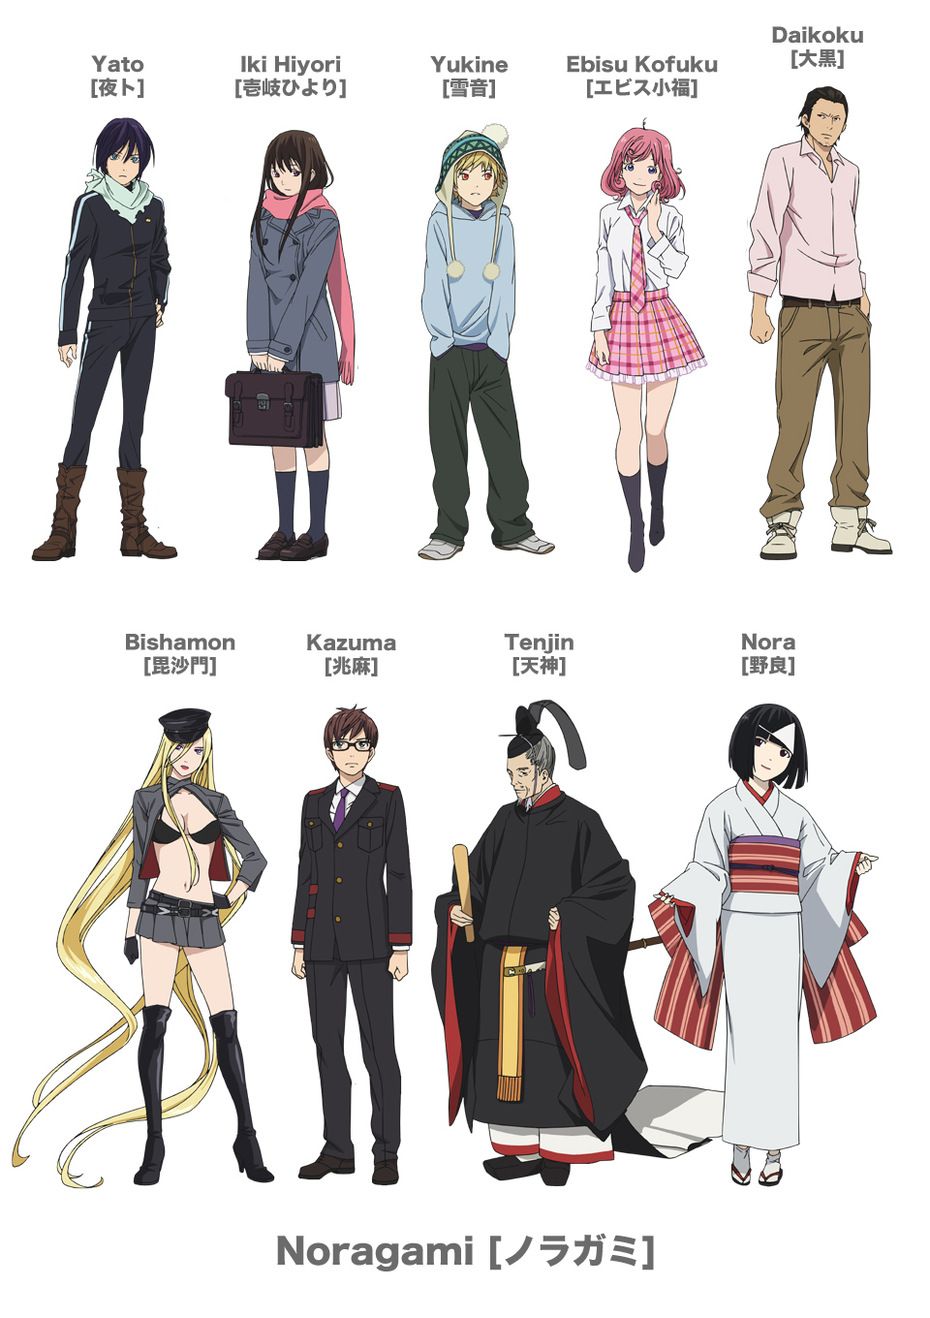 noragami characters